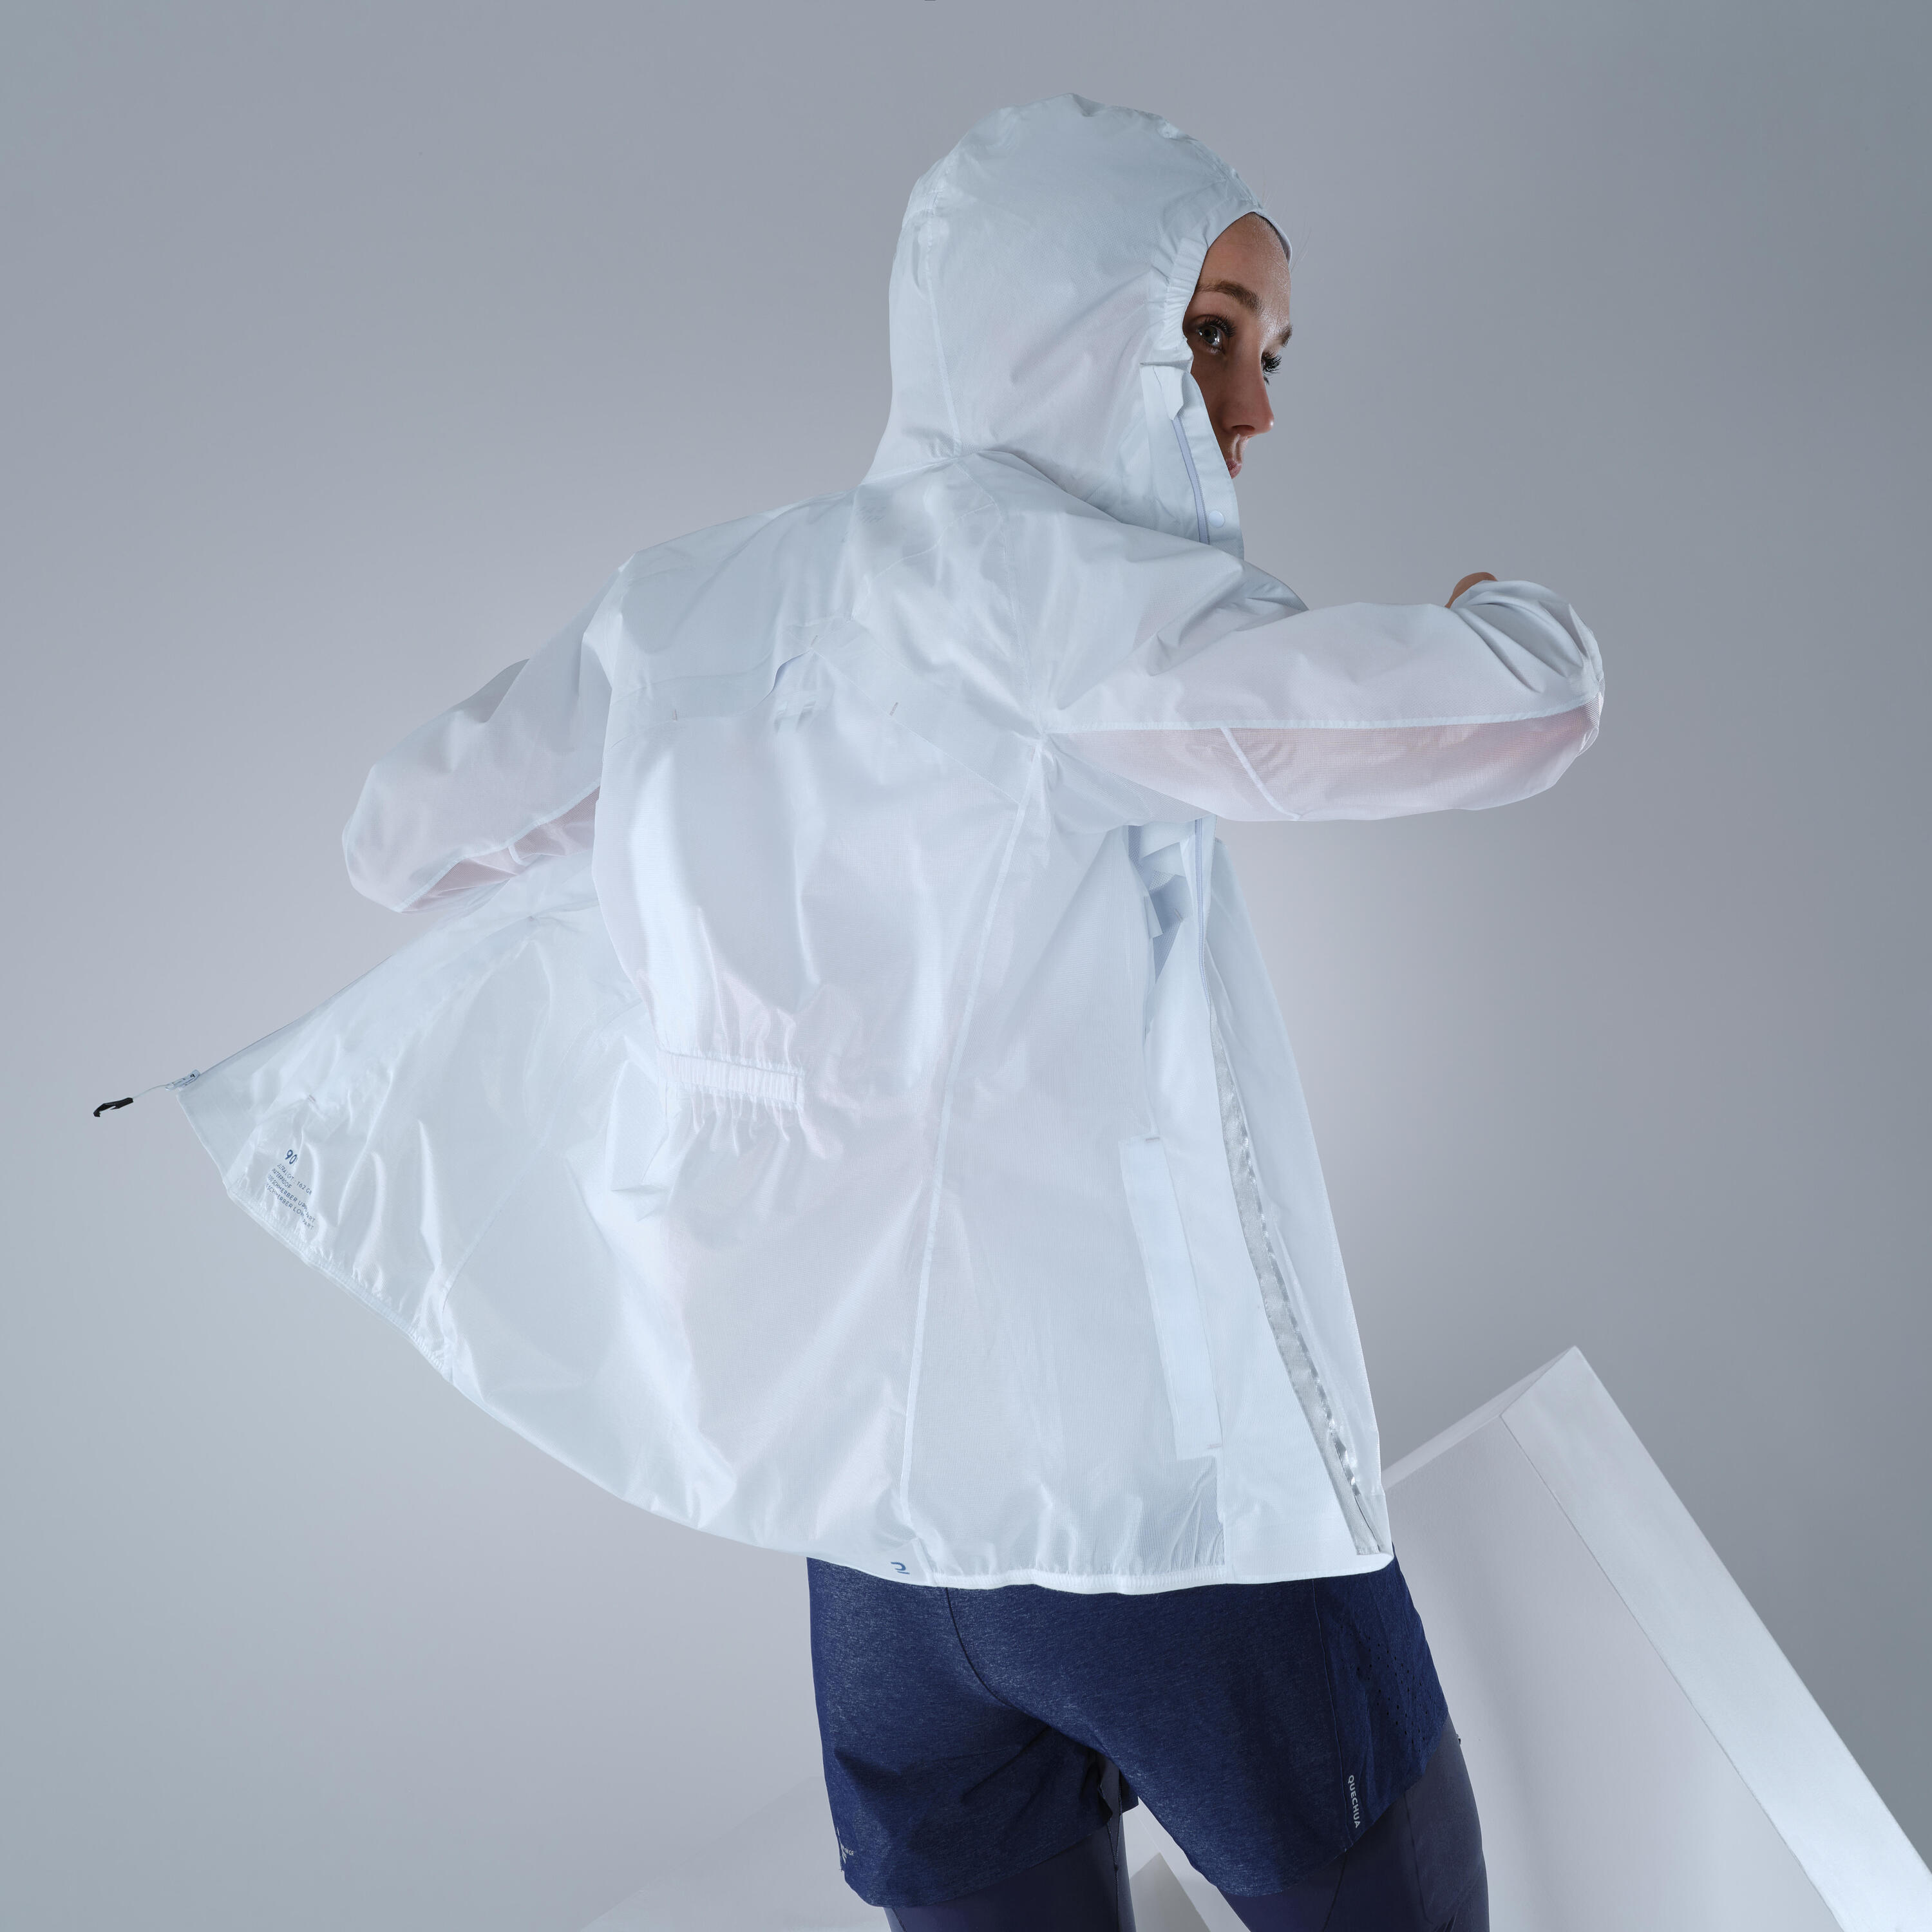 Women’s ultra-light hybrid fast hiking jacket FH900 grey. 6/9